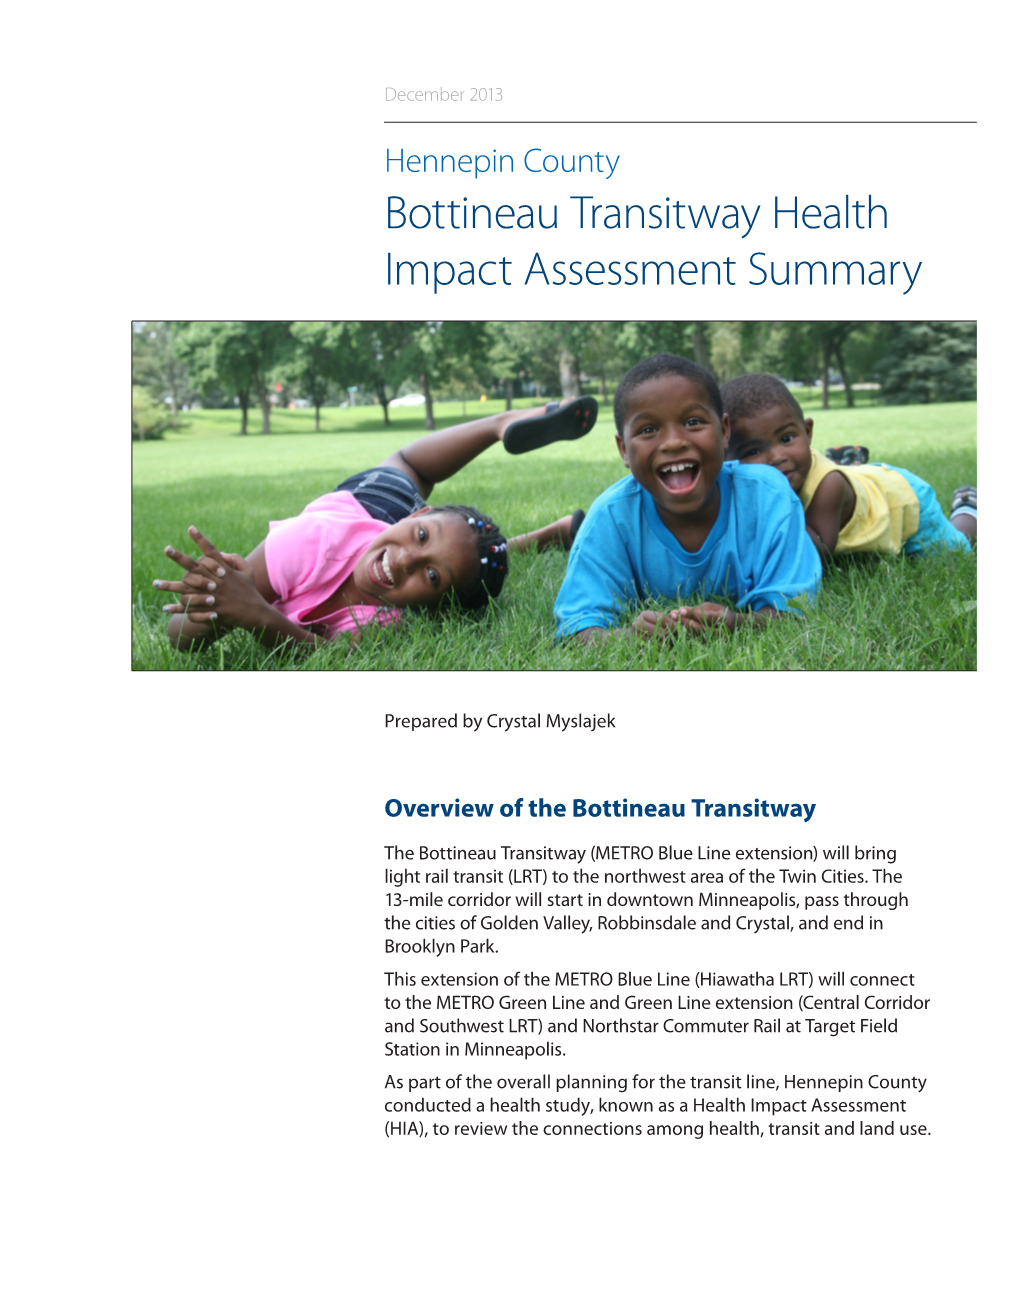 Bottineau Transitway Health Impact Assessment Summary